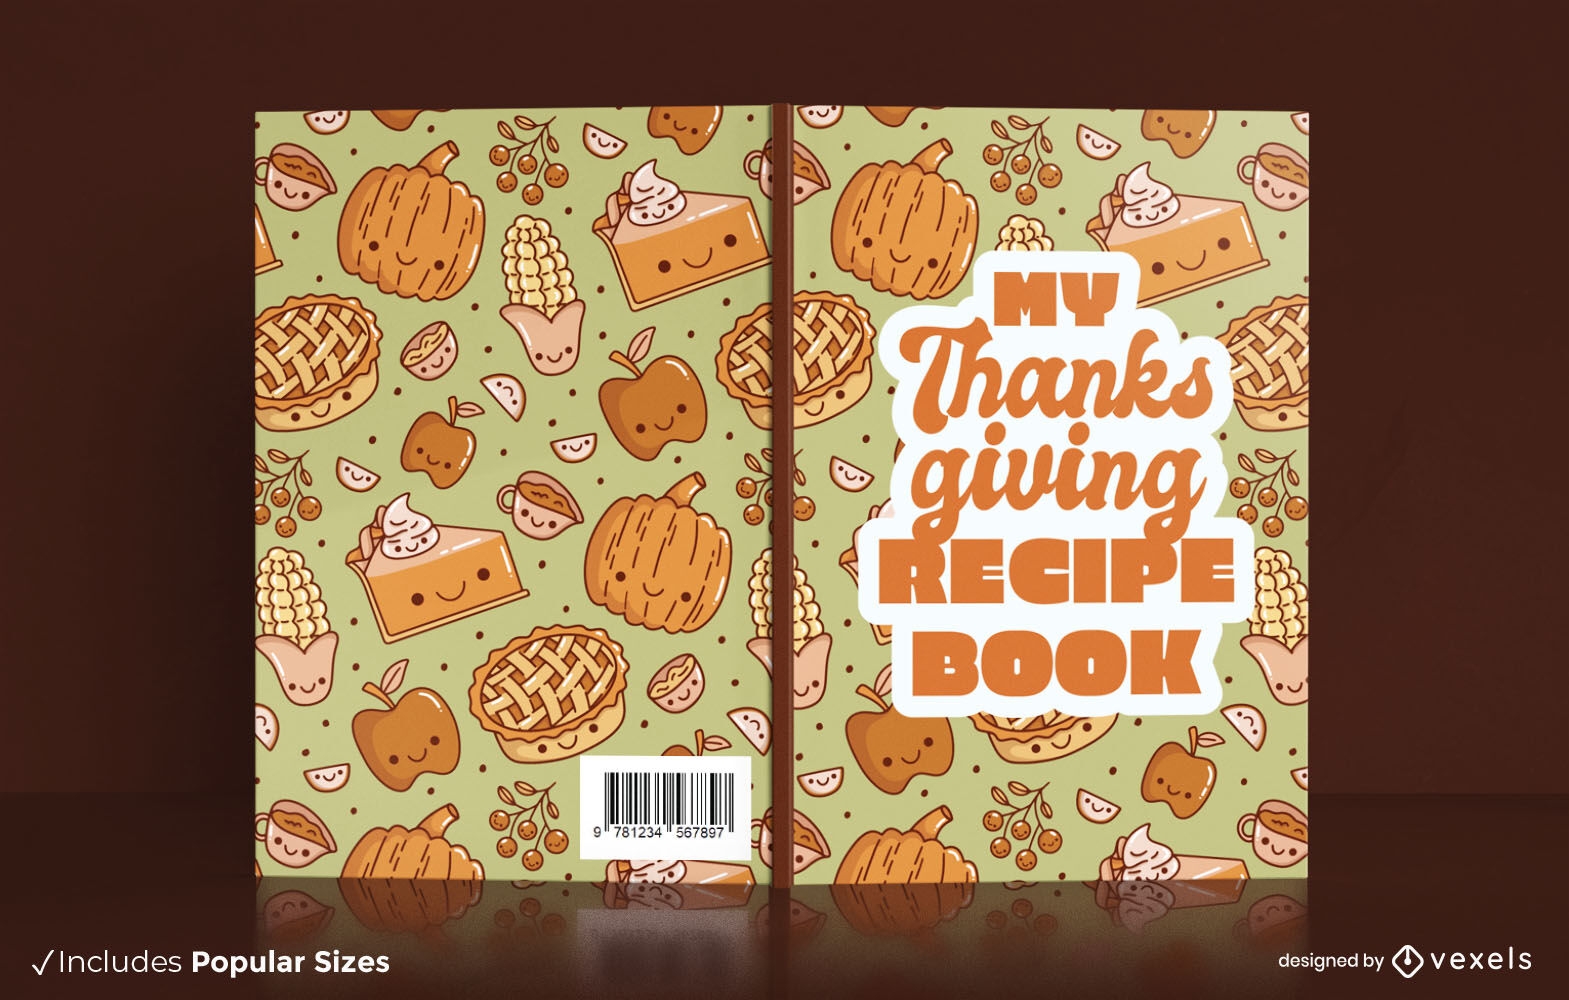 Thanksgiving recipe book cover design